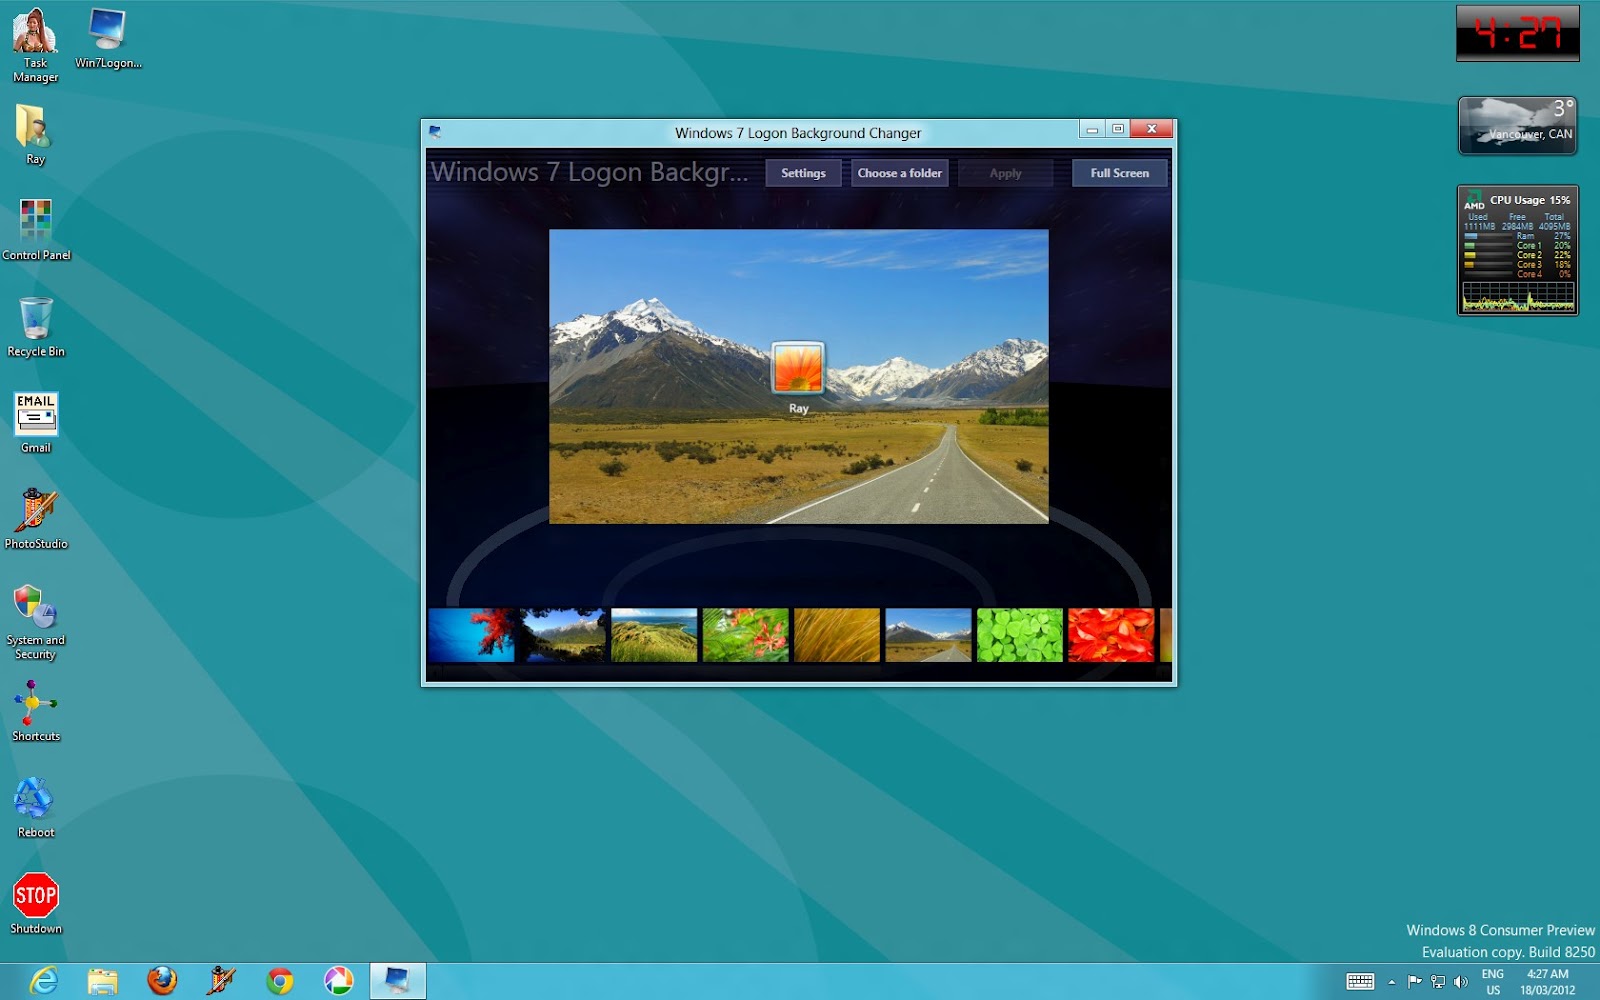 wallpapers 1way: How To Change Wallpaper In Windows 7 Starter